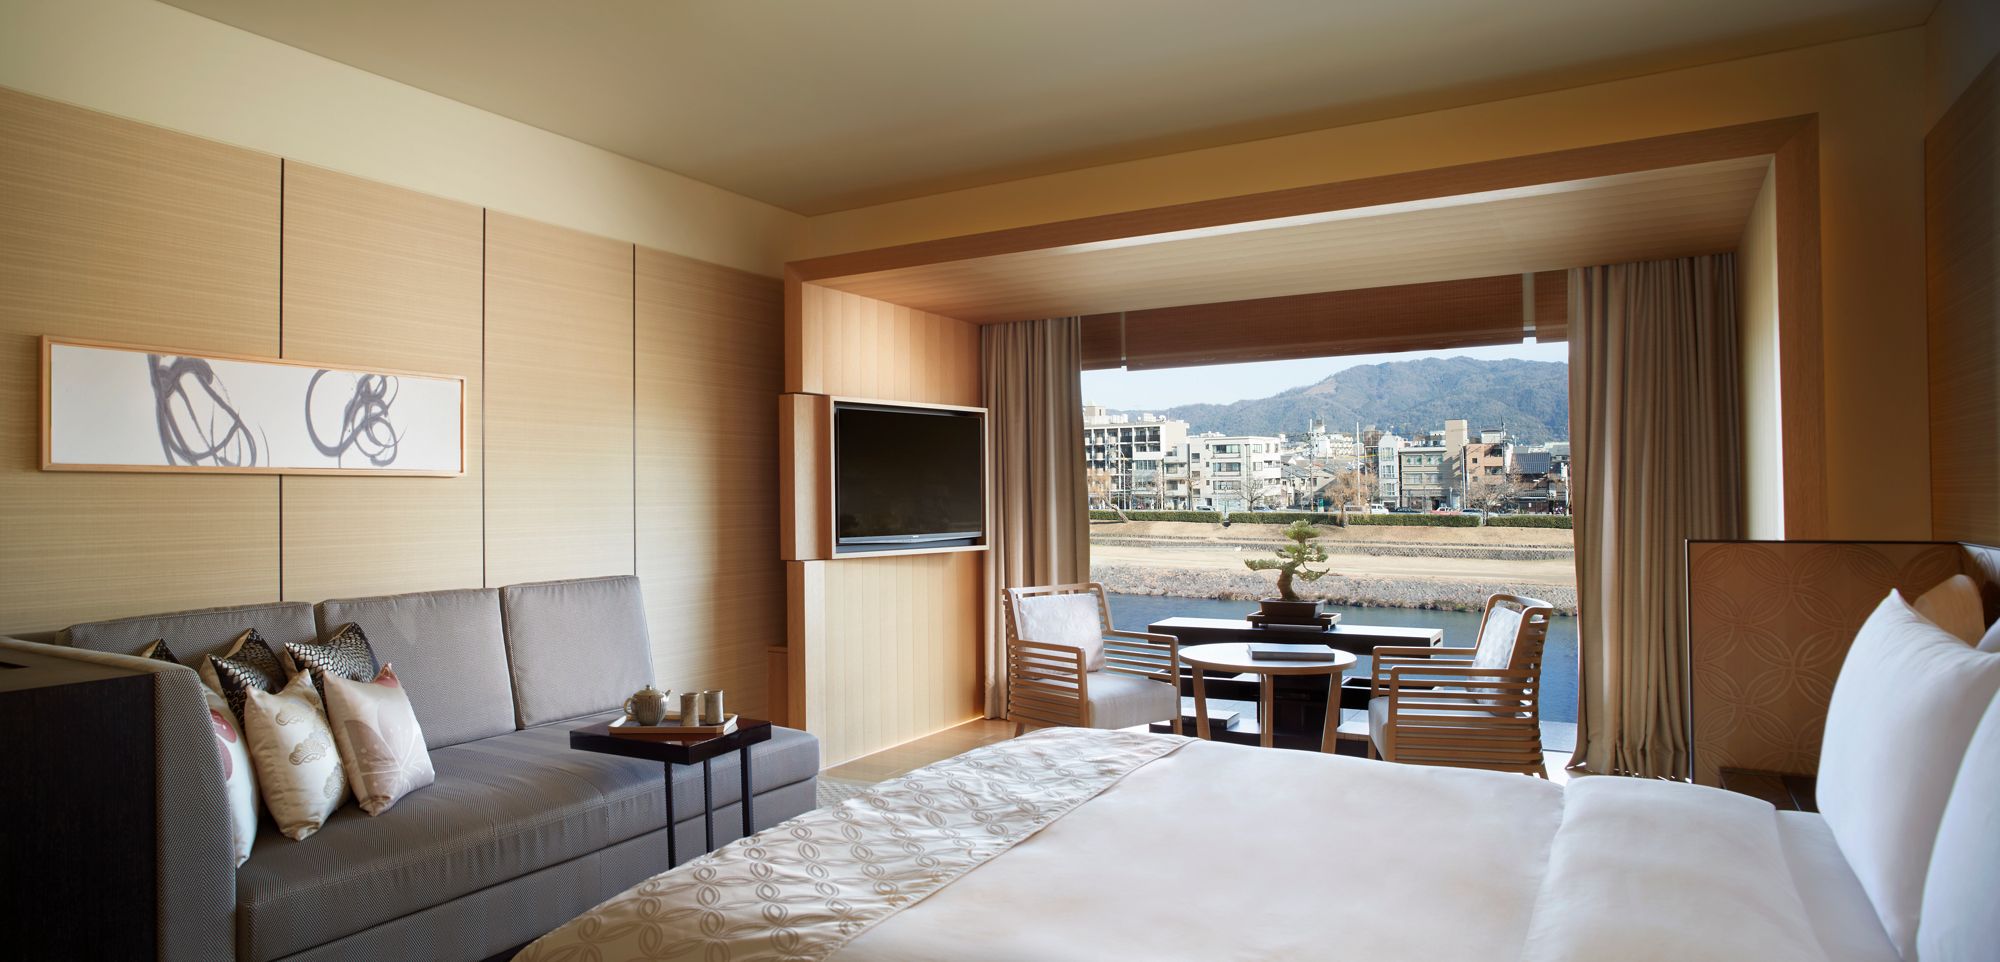 TripAdvisor 京都人氣酒店 TOP 2！京都麗思卡爾頓酒店(The Ritz-Carlton Kyoto)